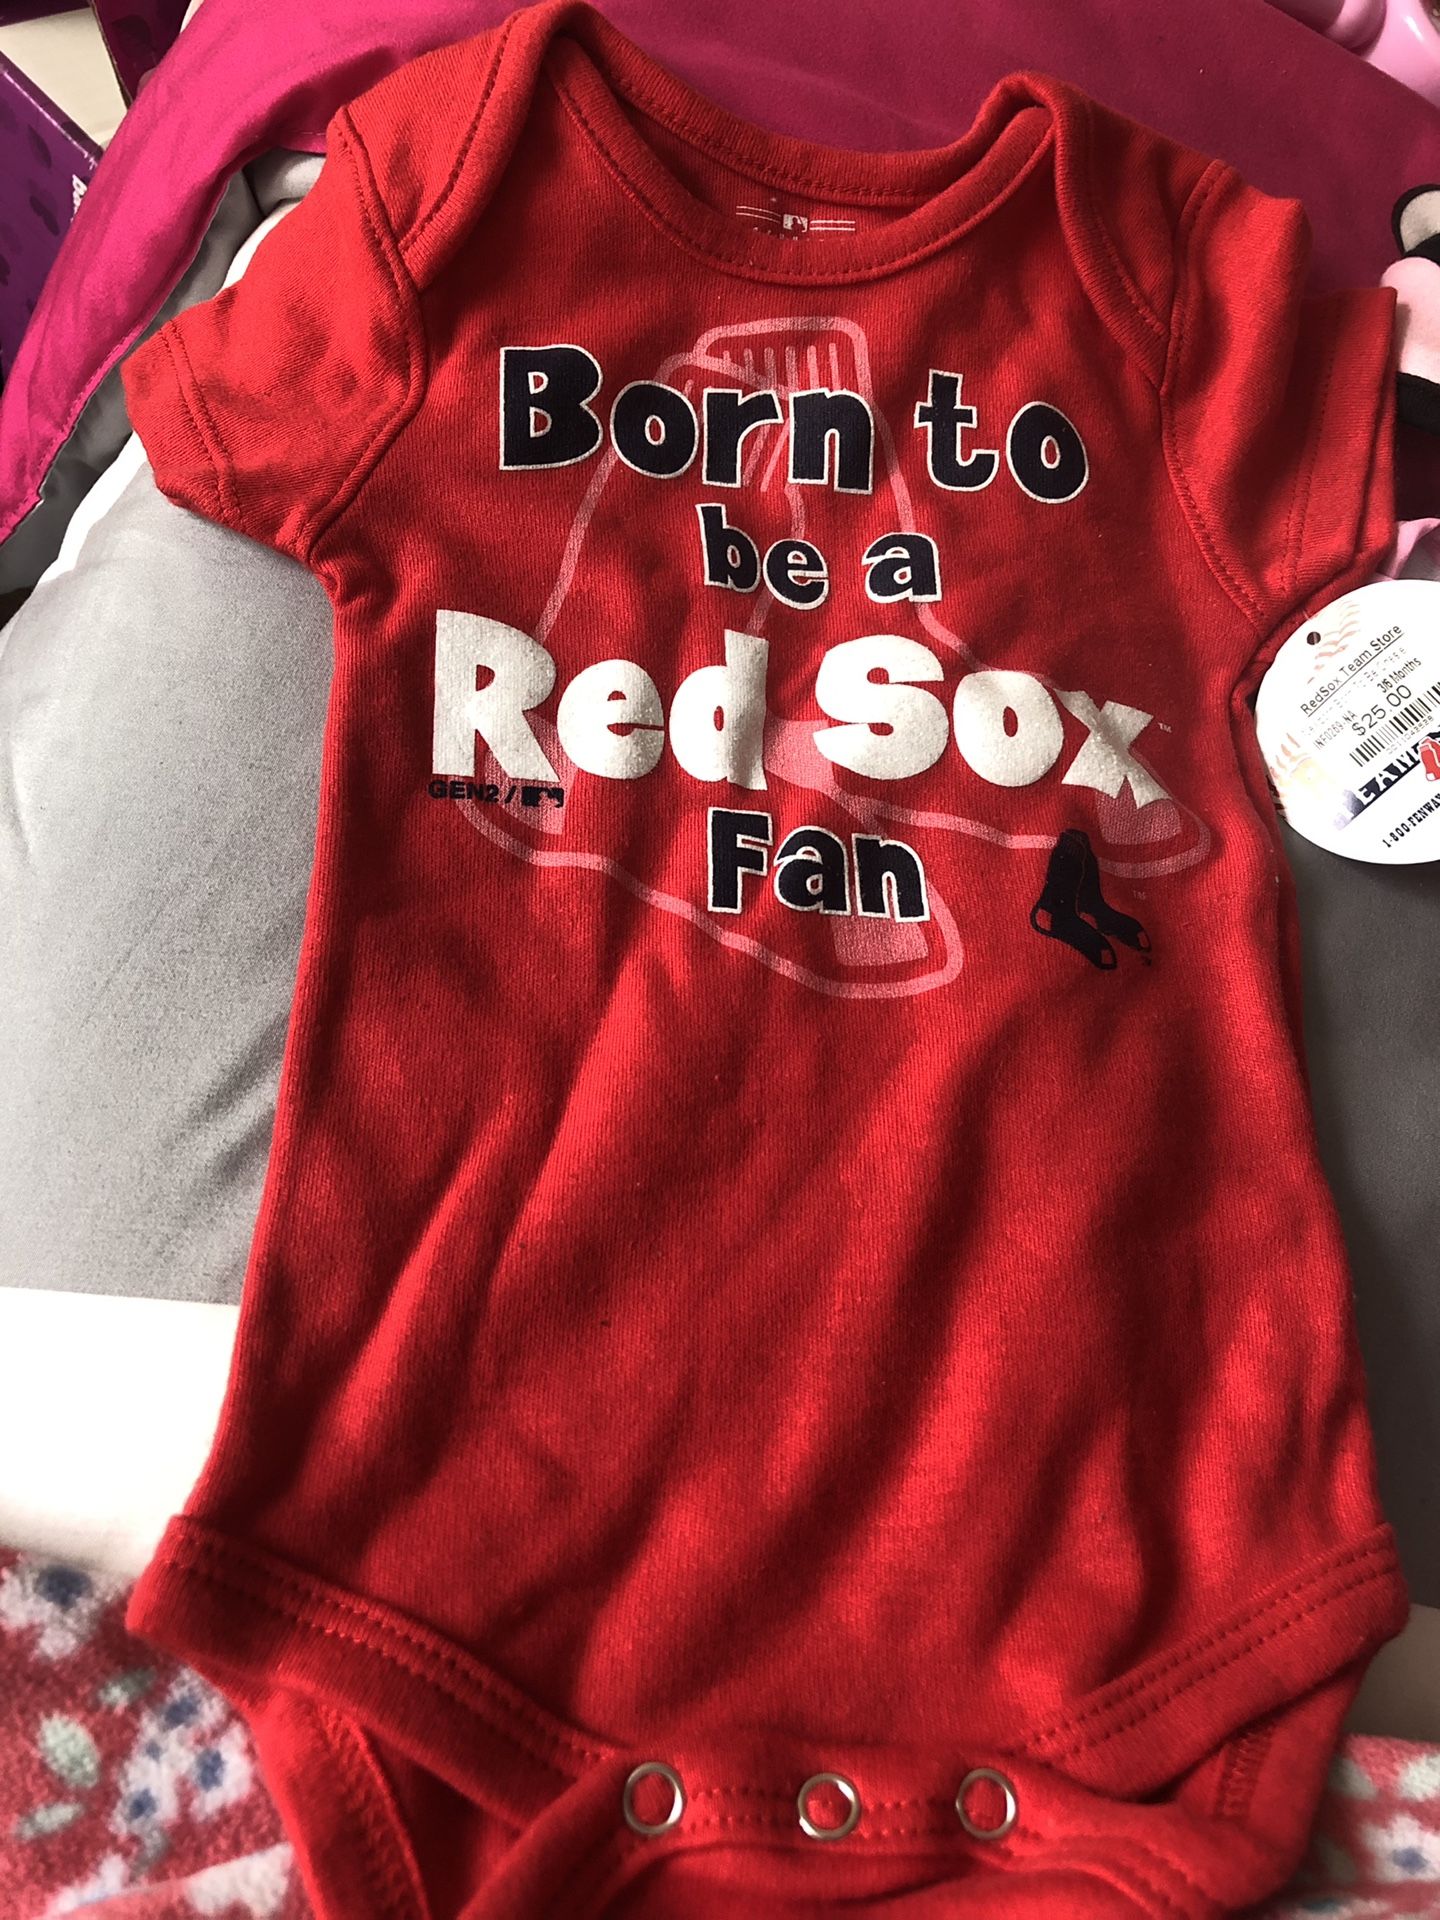 Red Sox onesie